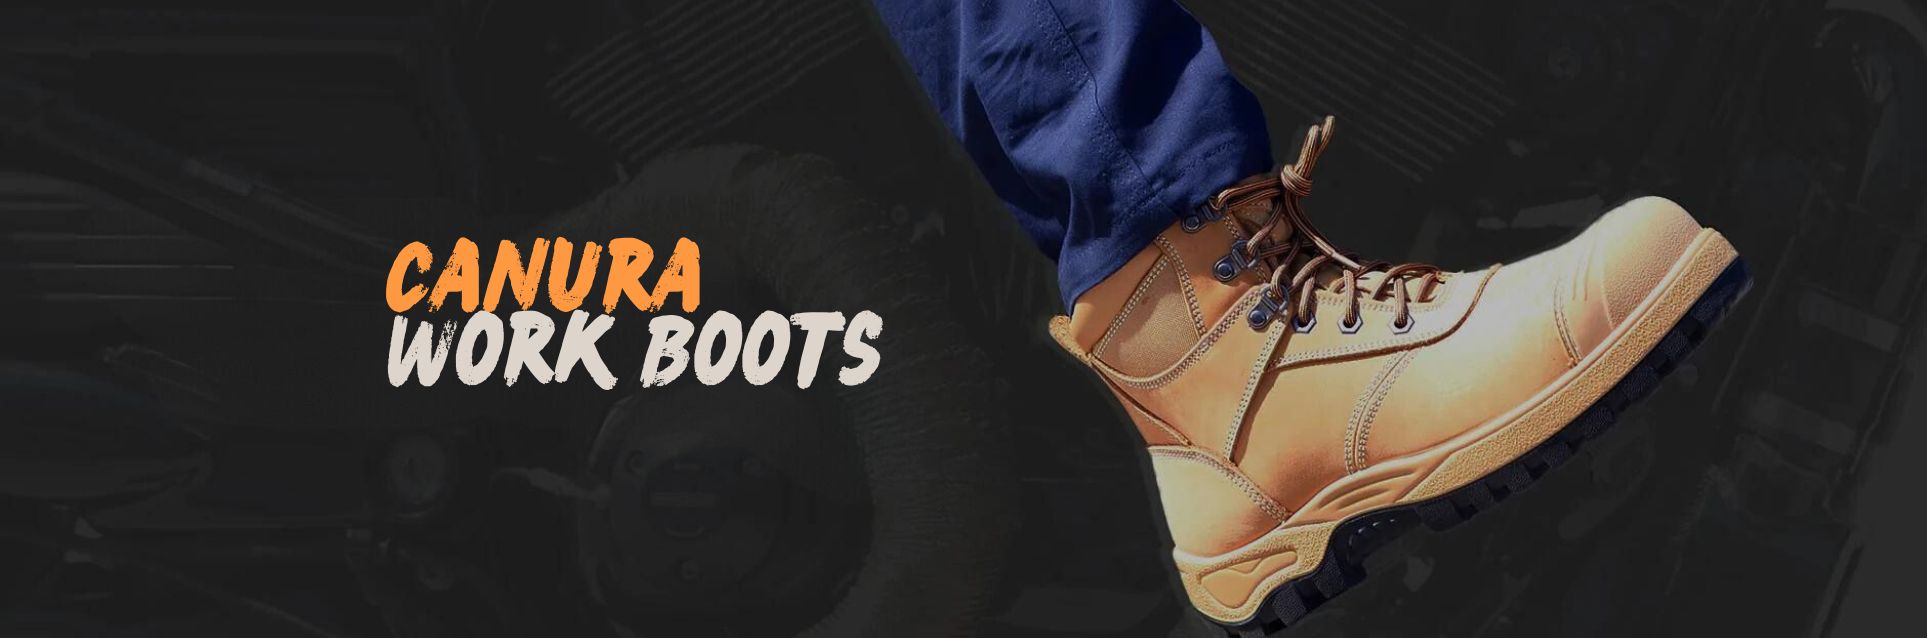 canura work boots